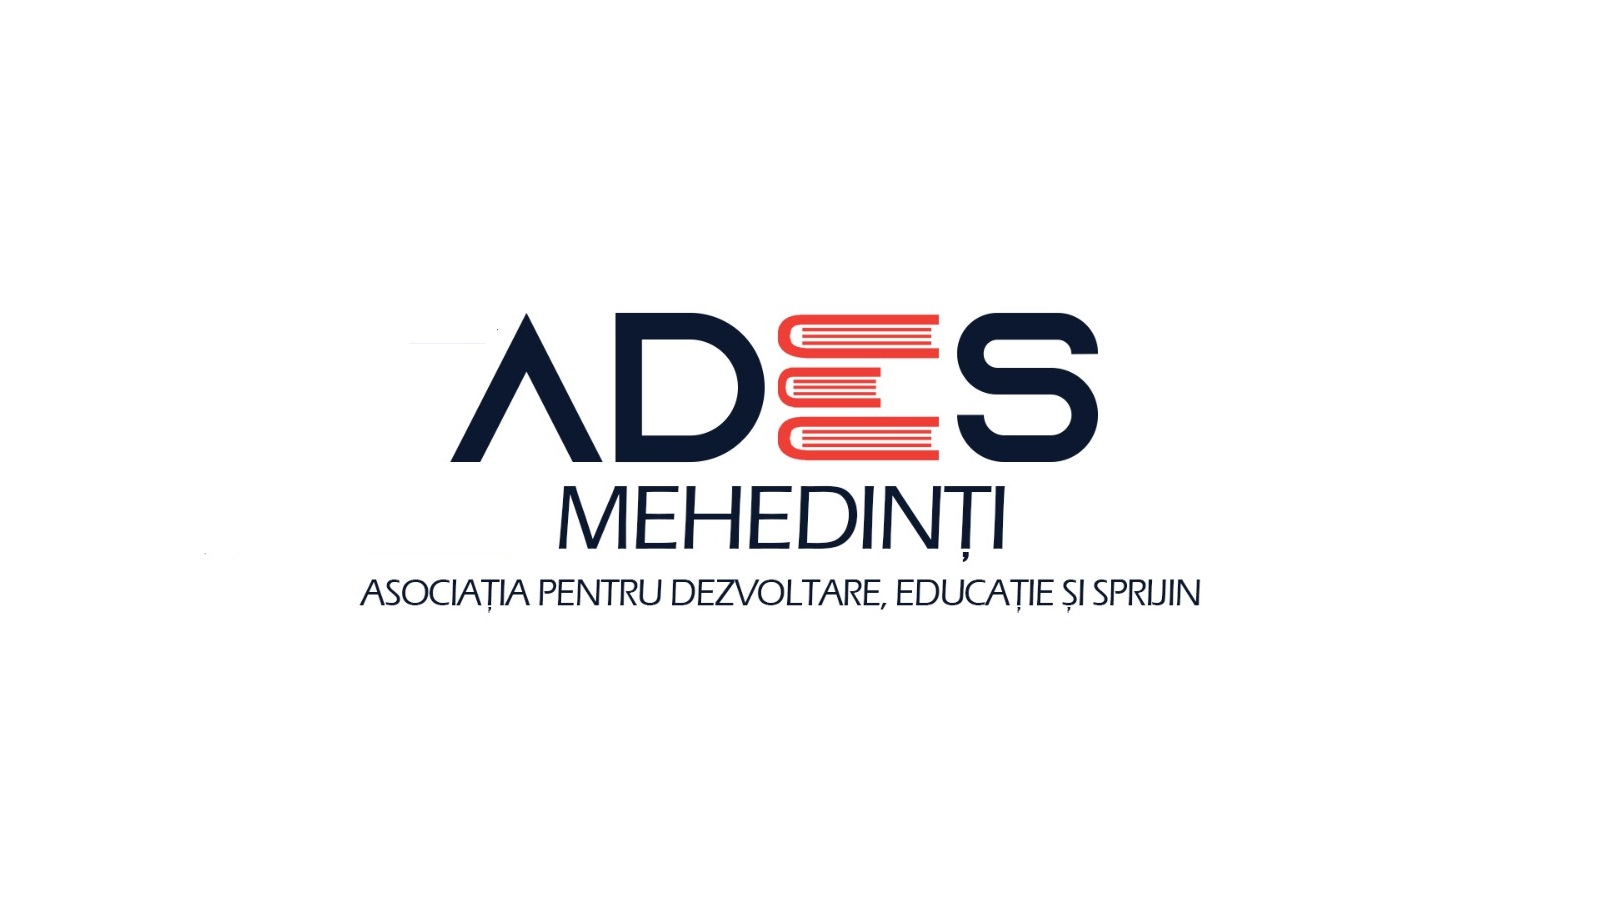 ADES - Mehedinți logo